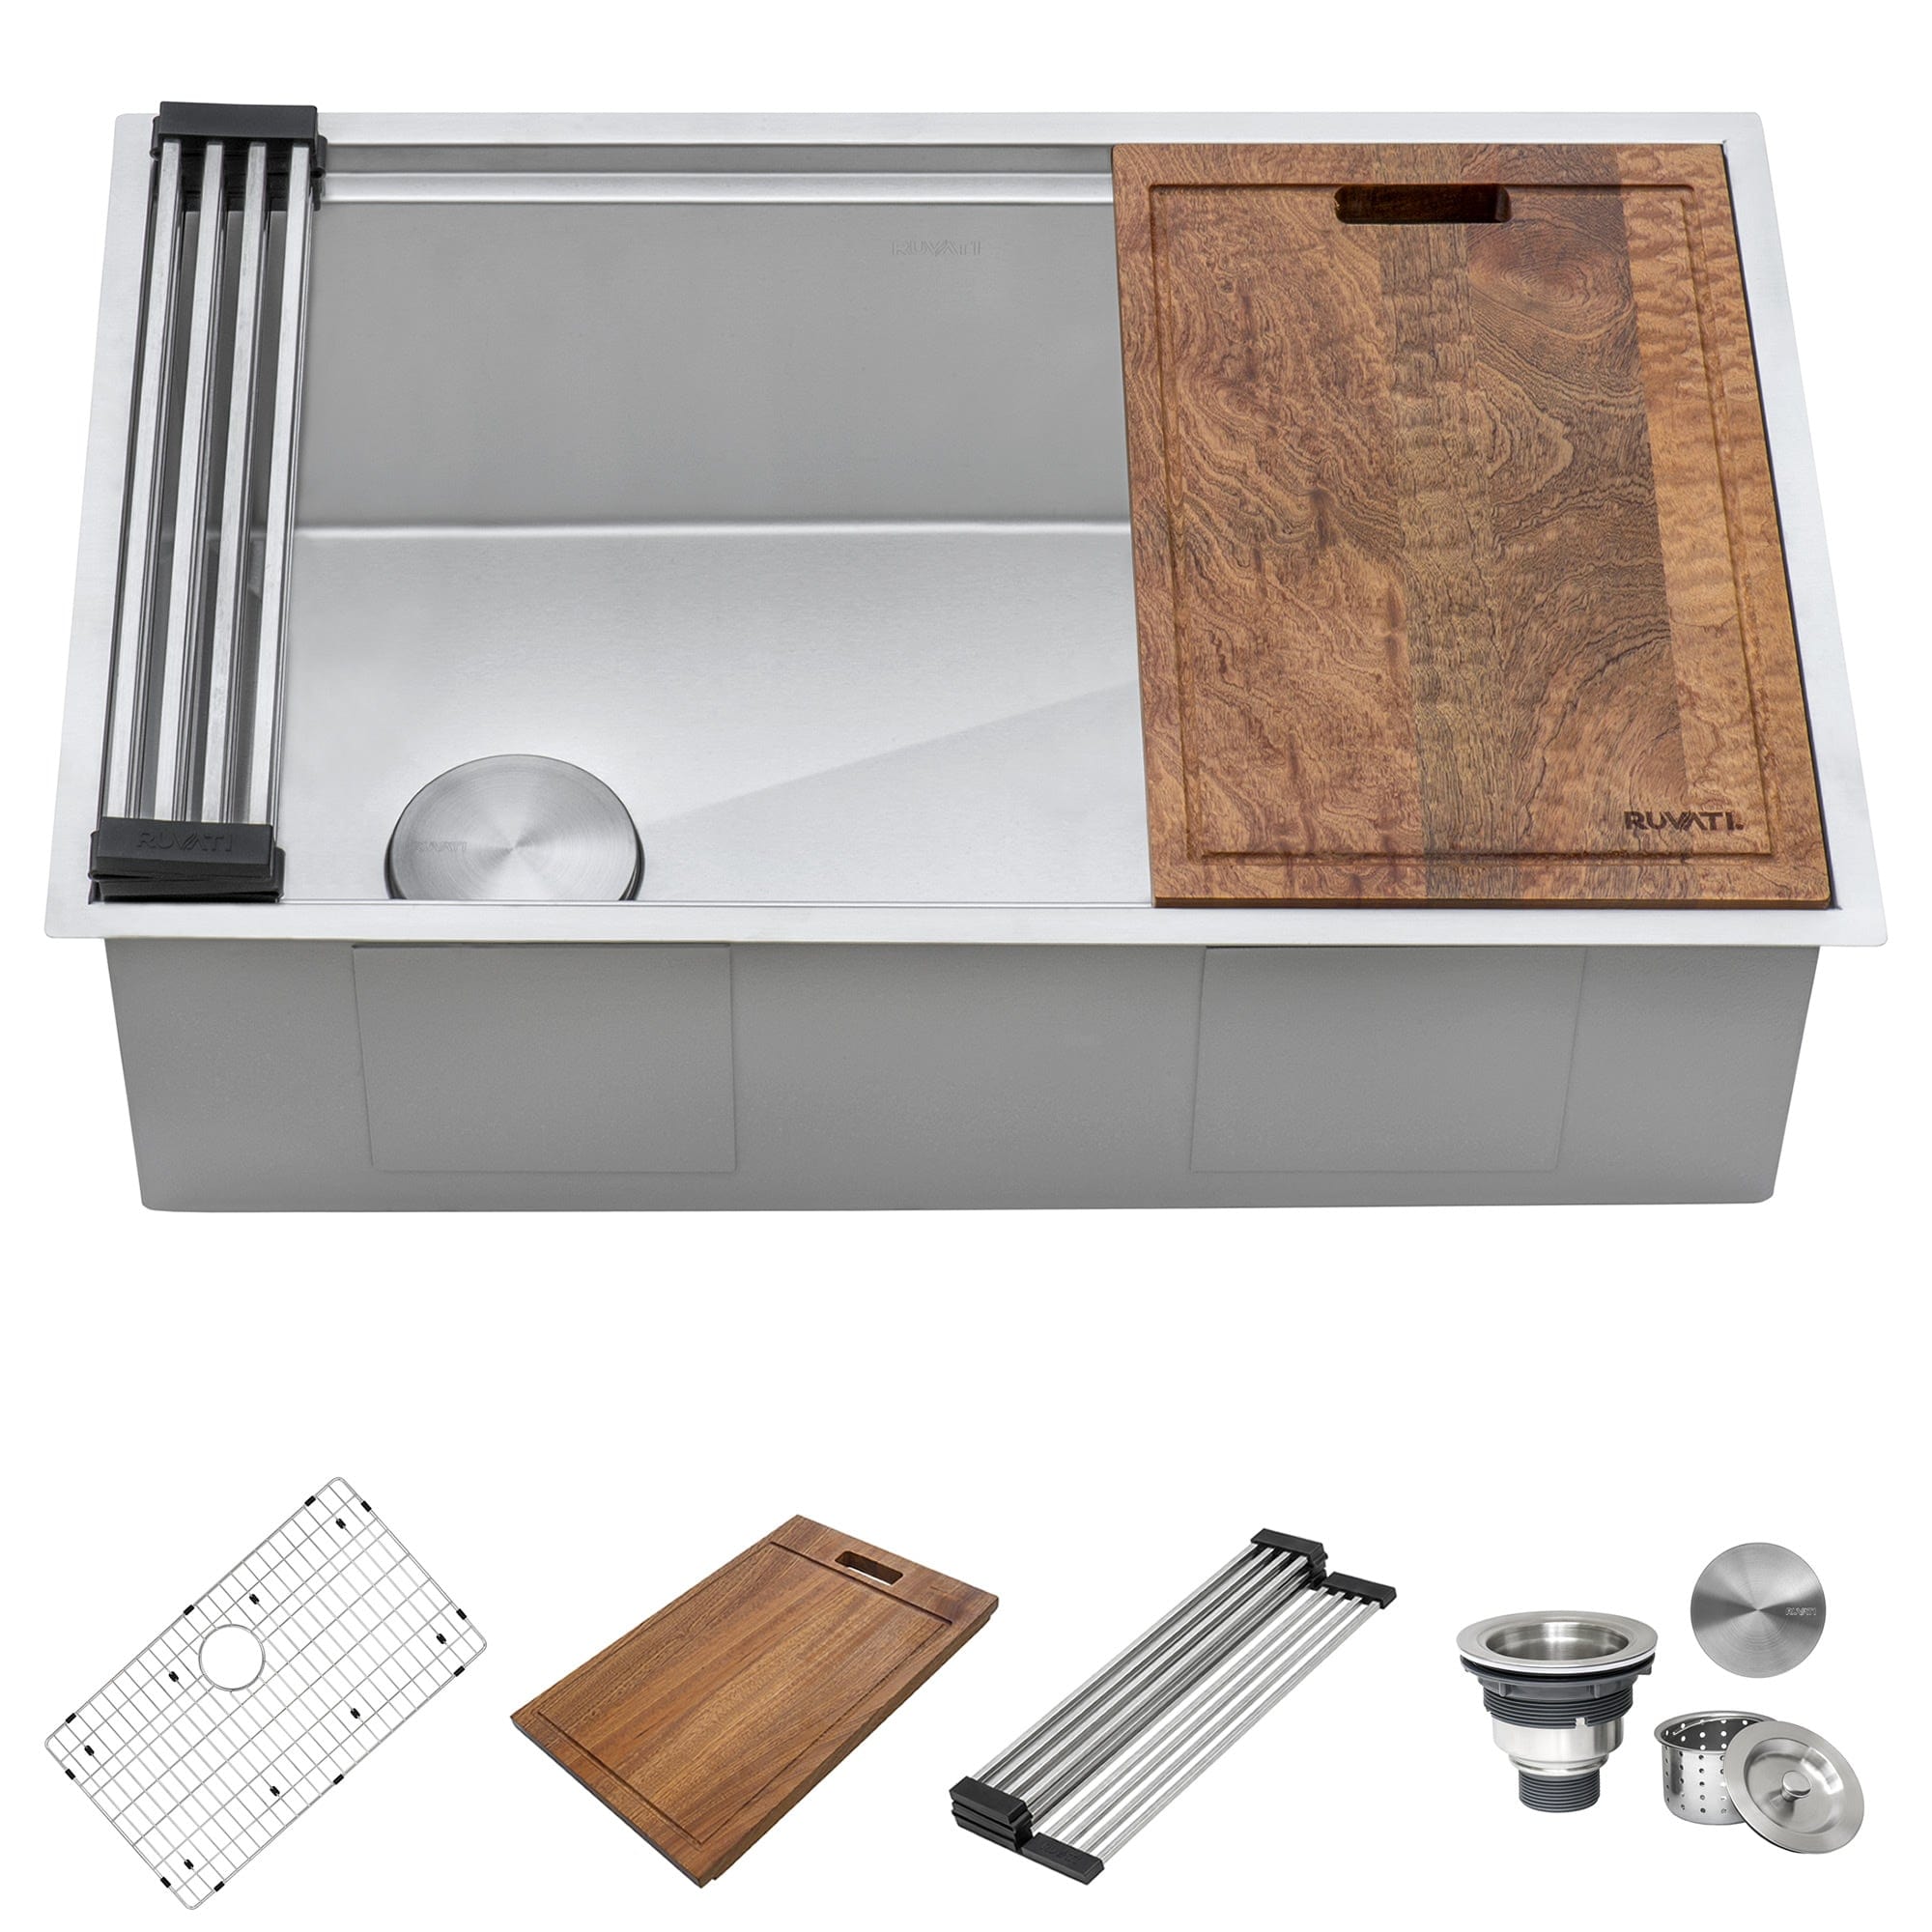 Ruvati Veniso 27" Workstation Slope Bottom Stainless Steel Kitchen Sink RVH8570